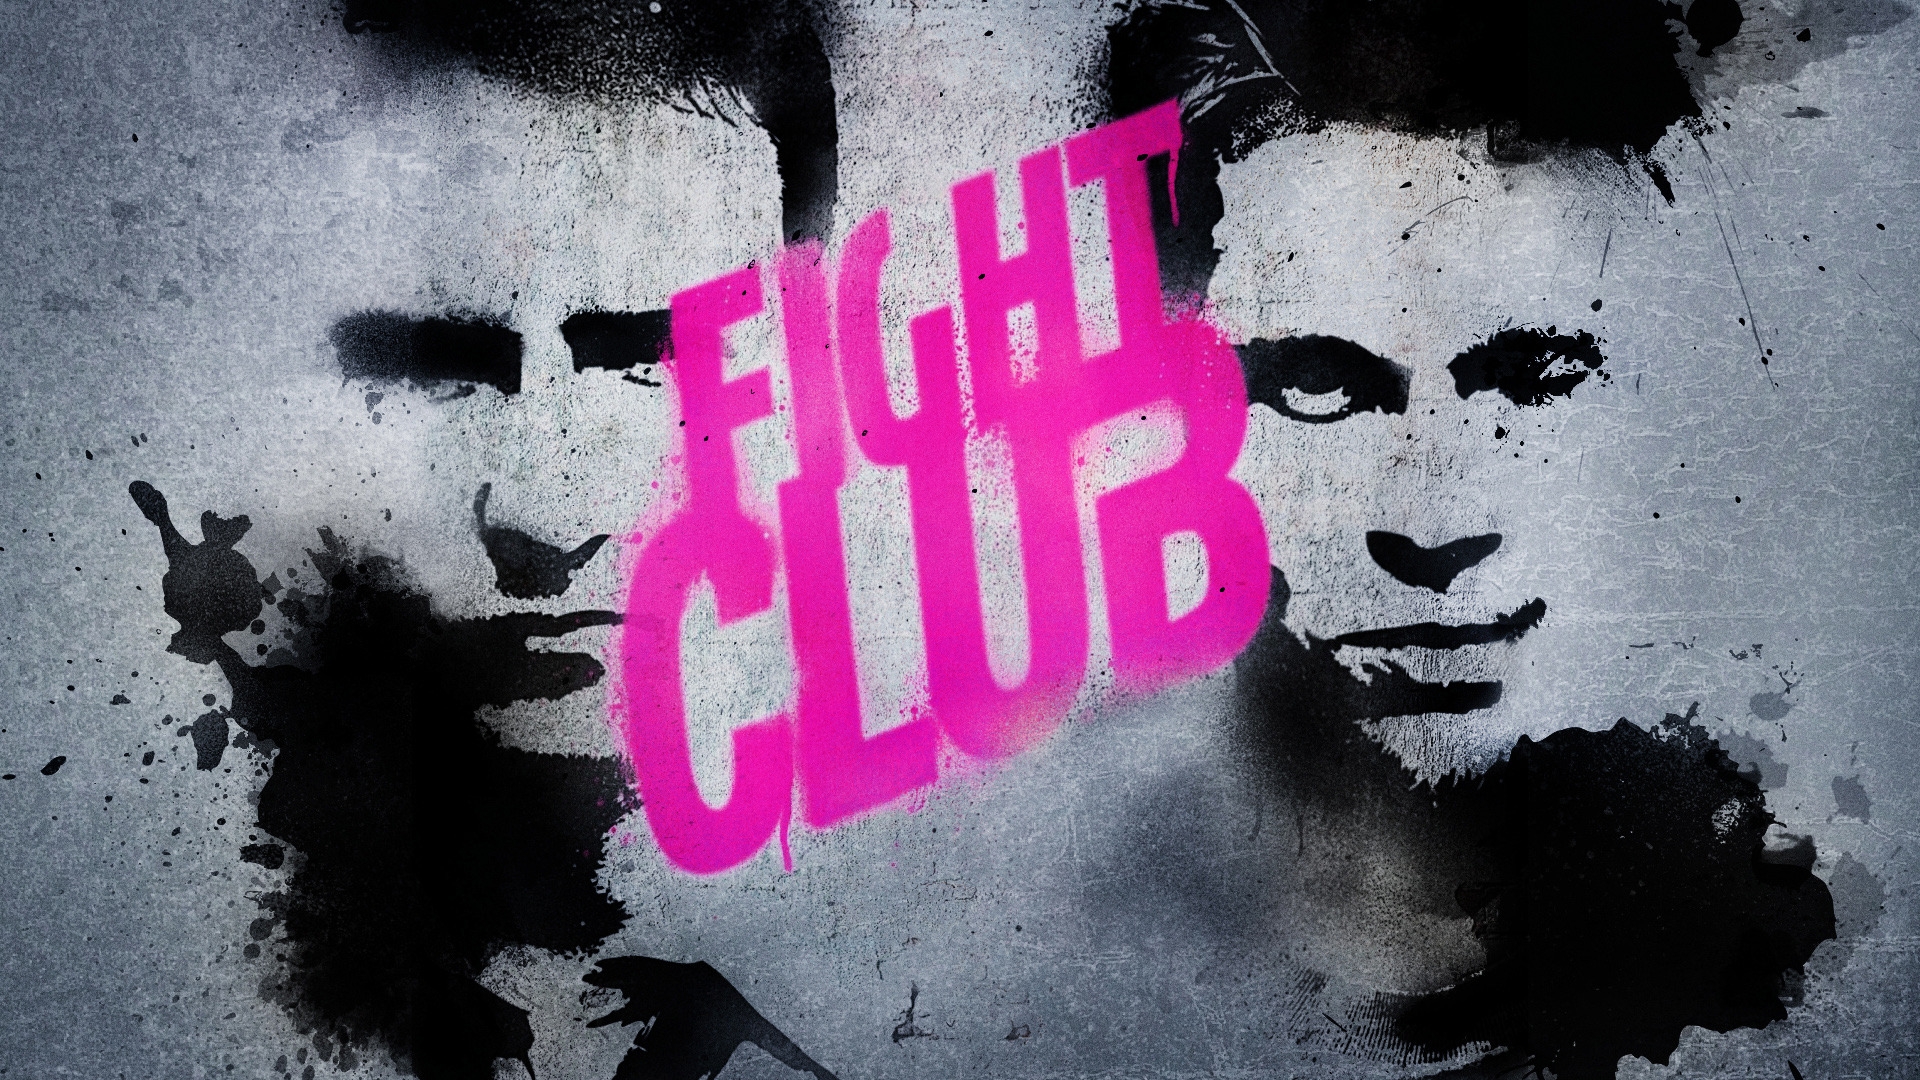 Fight Club Artwork for 1920 x 1080 HDTV 1080p resolution